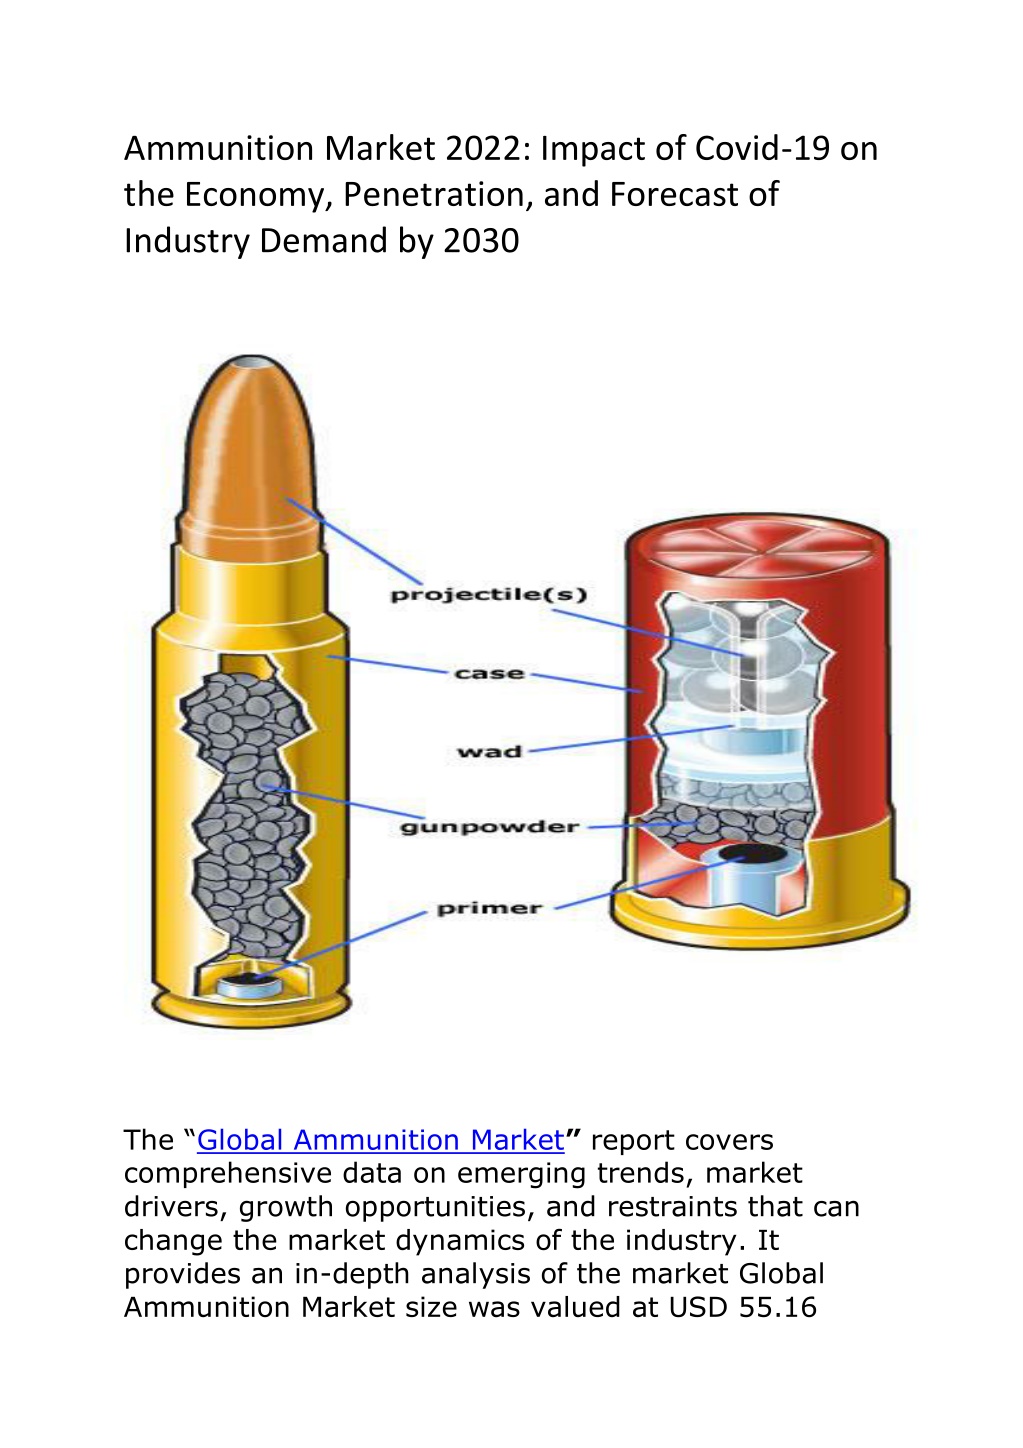 PPT - Ammunition Market 2022 PowerPoint Presentation, free download -  ID:12351602